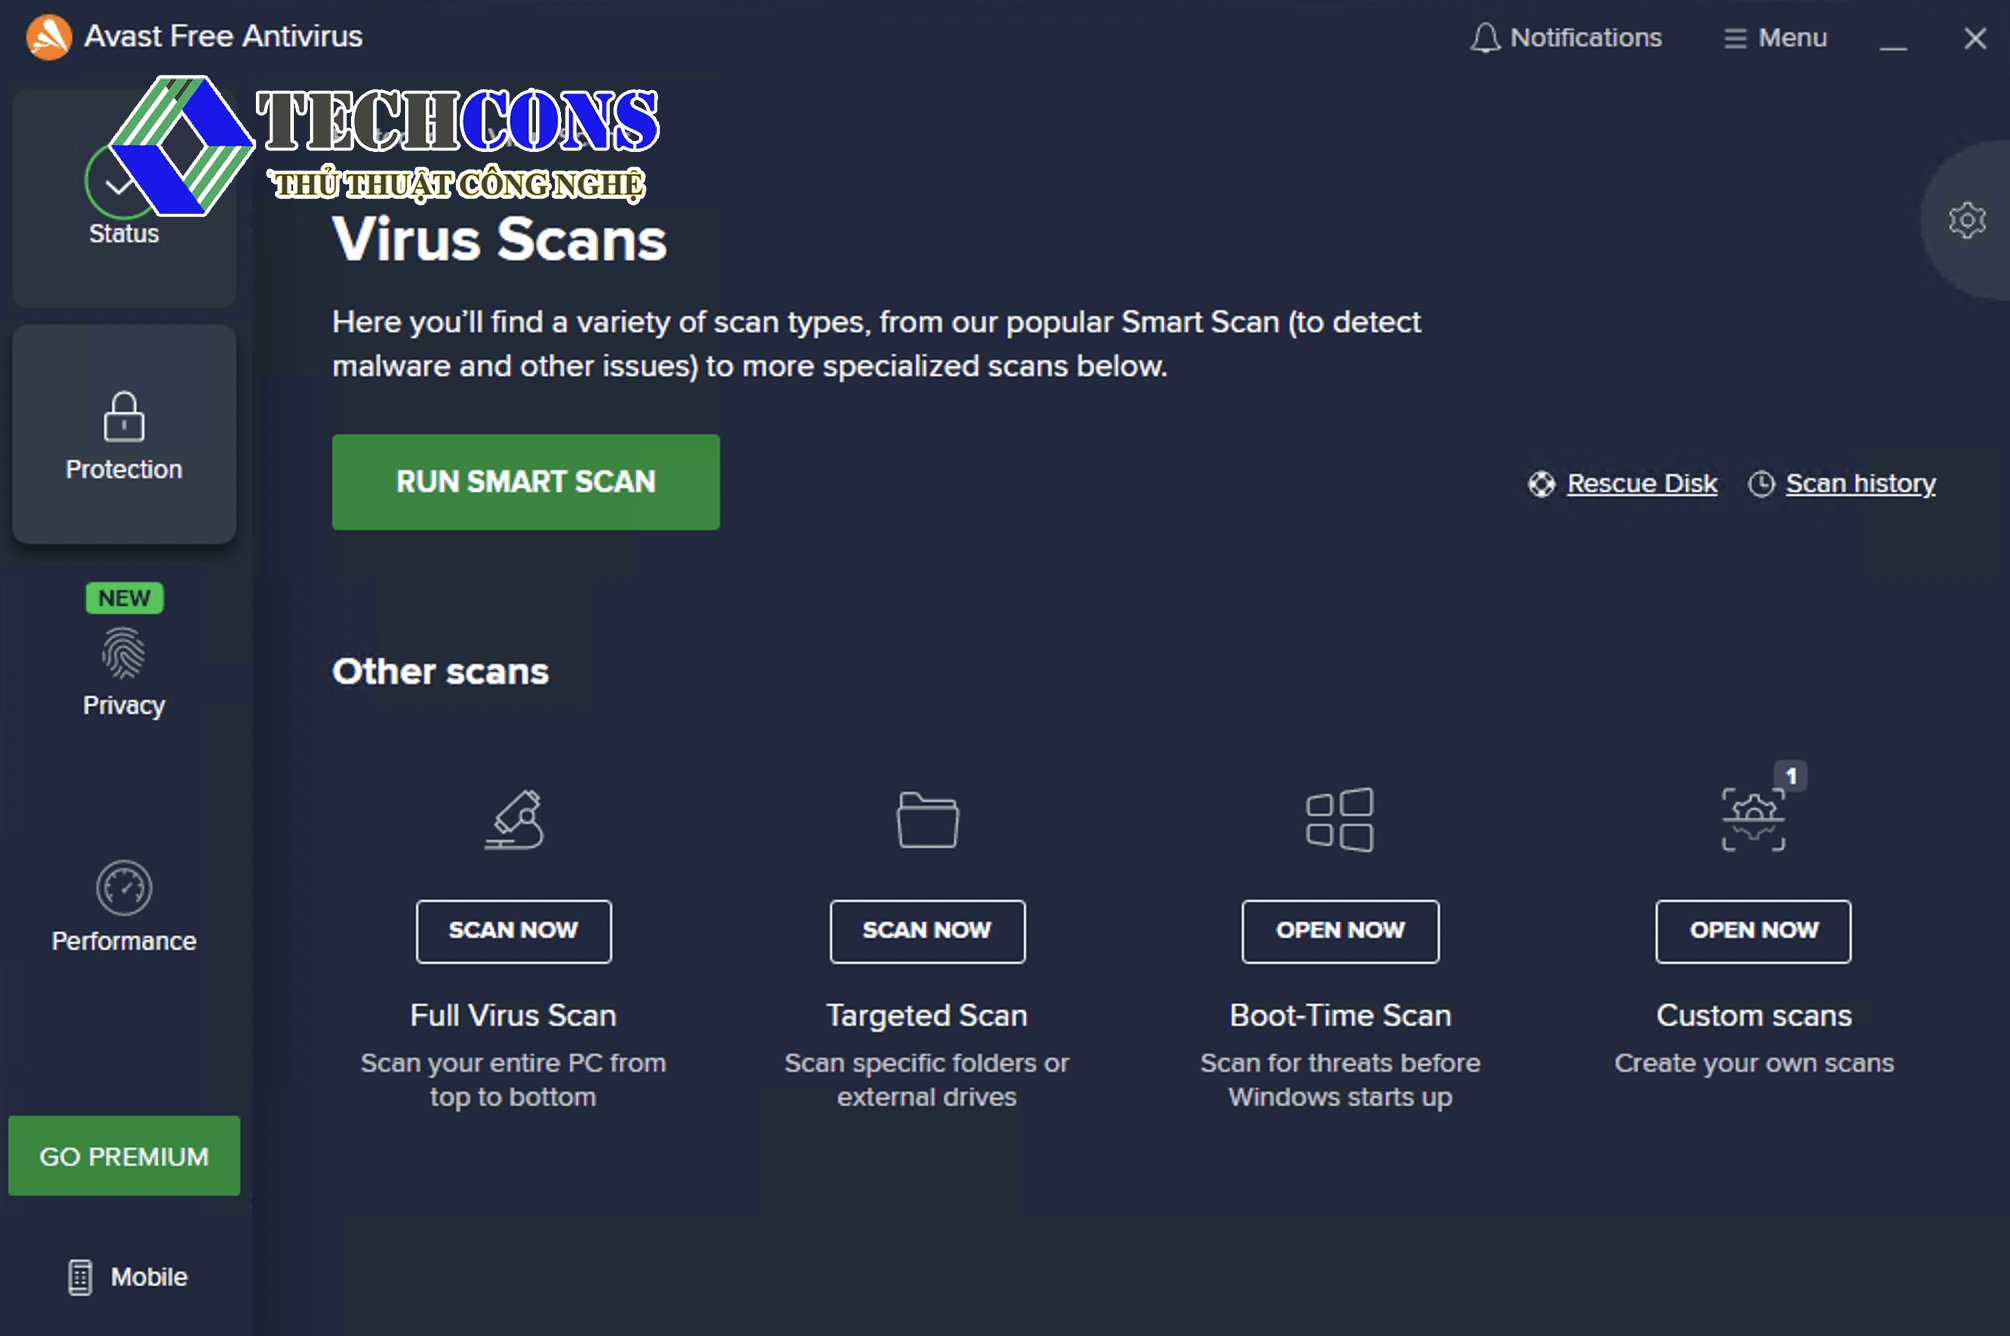 anti-virus